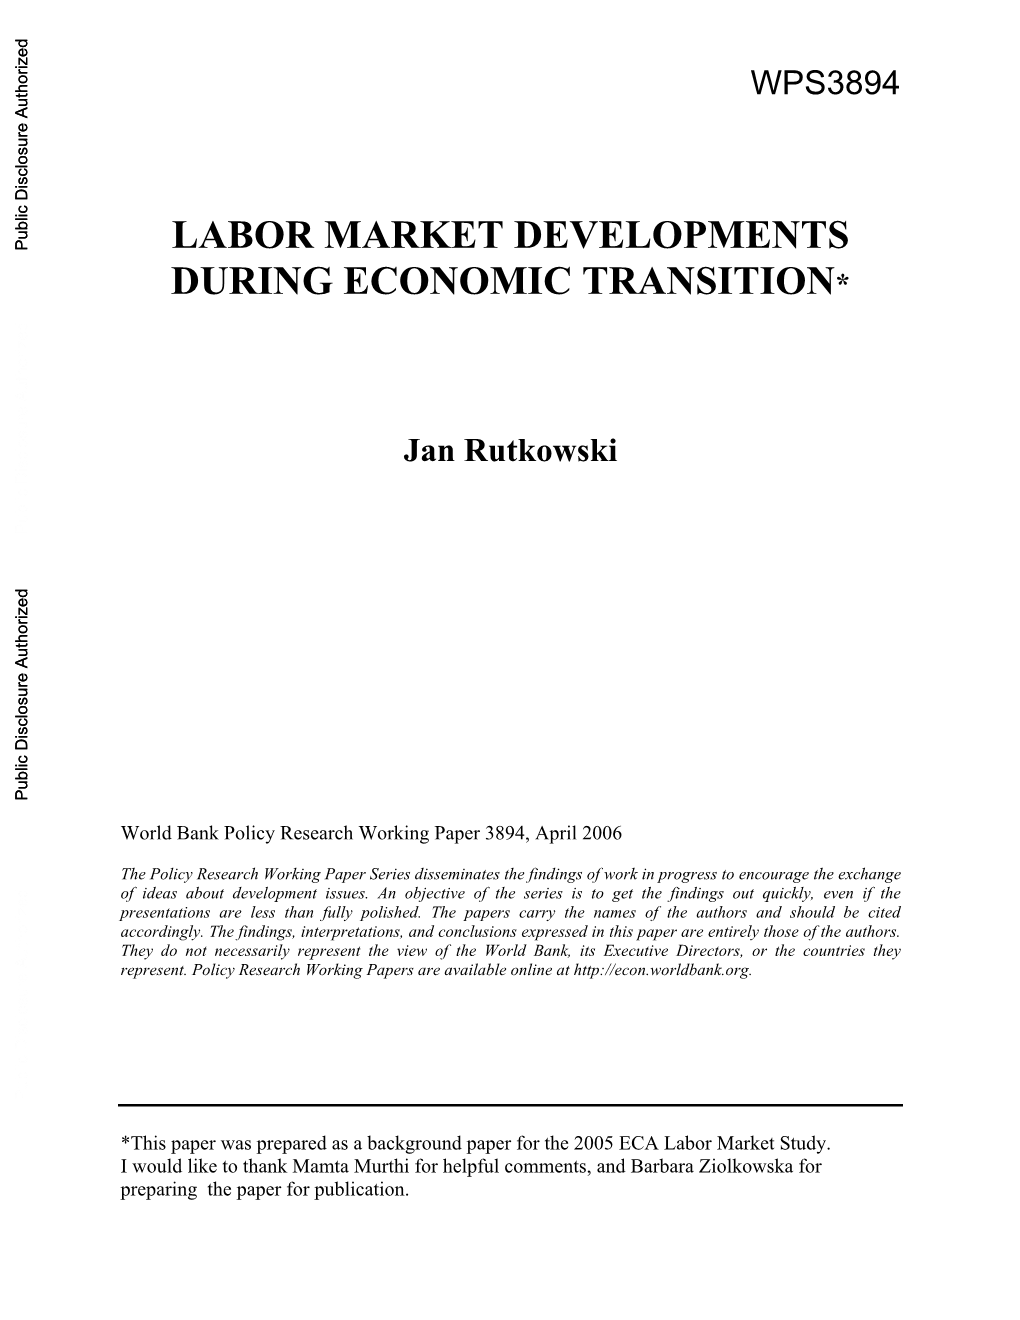 Labor Market Developments During Economic Transition*